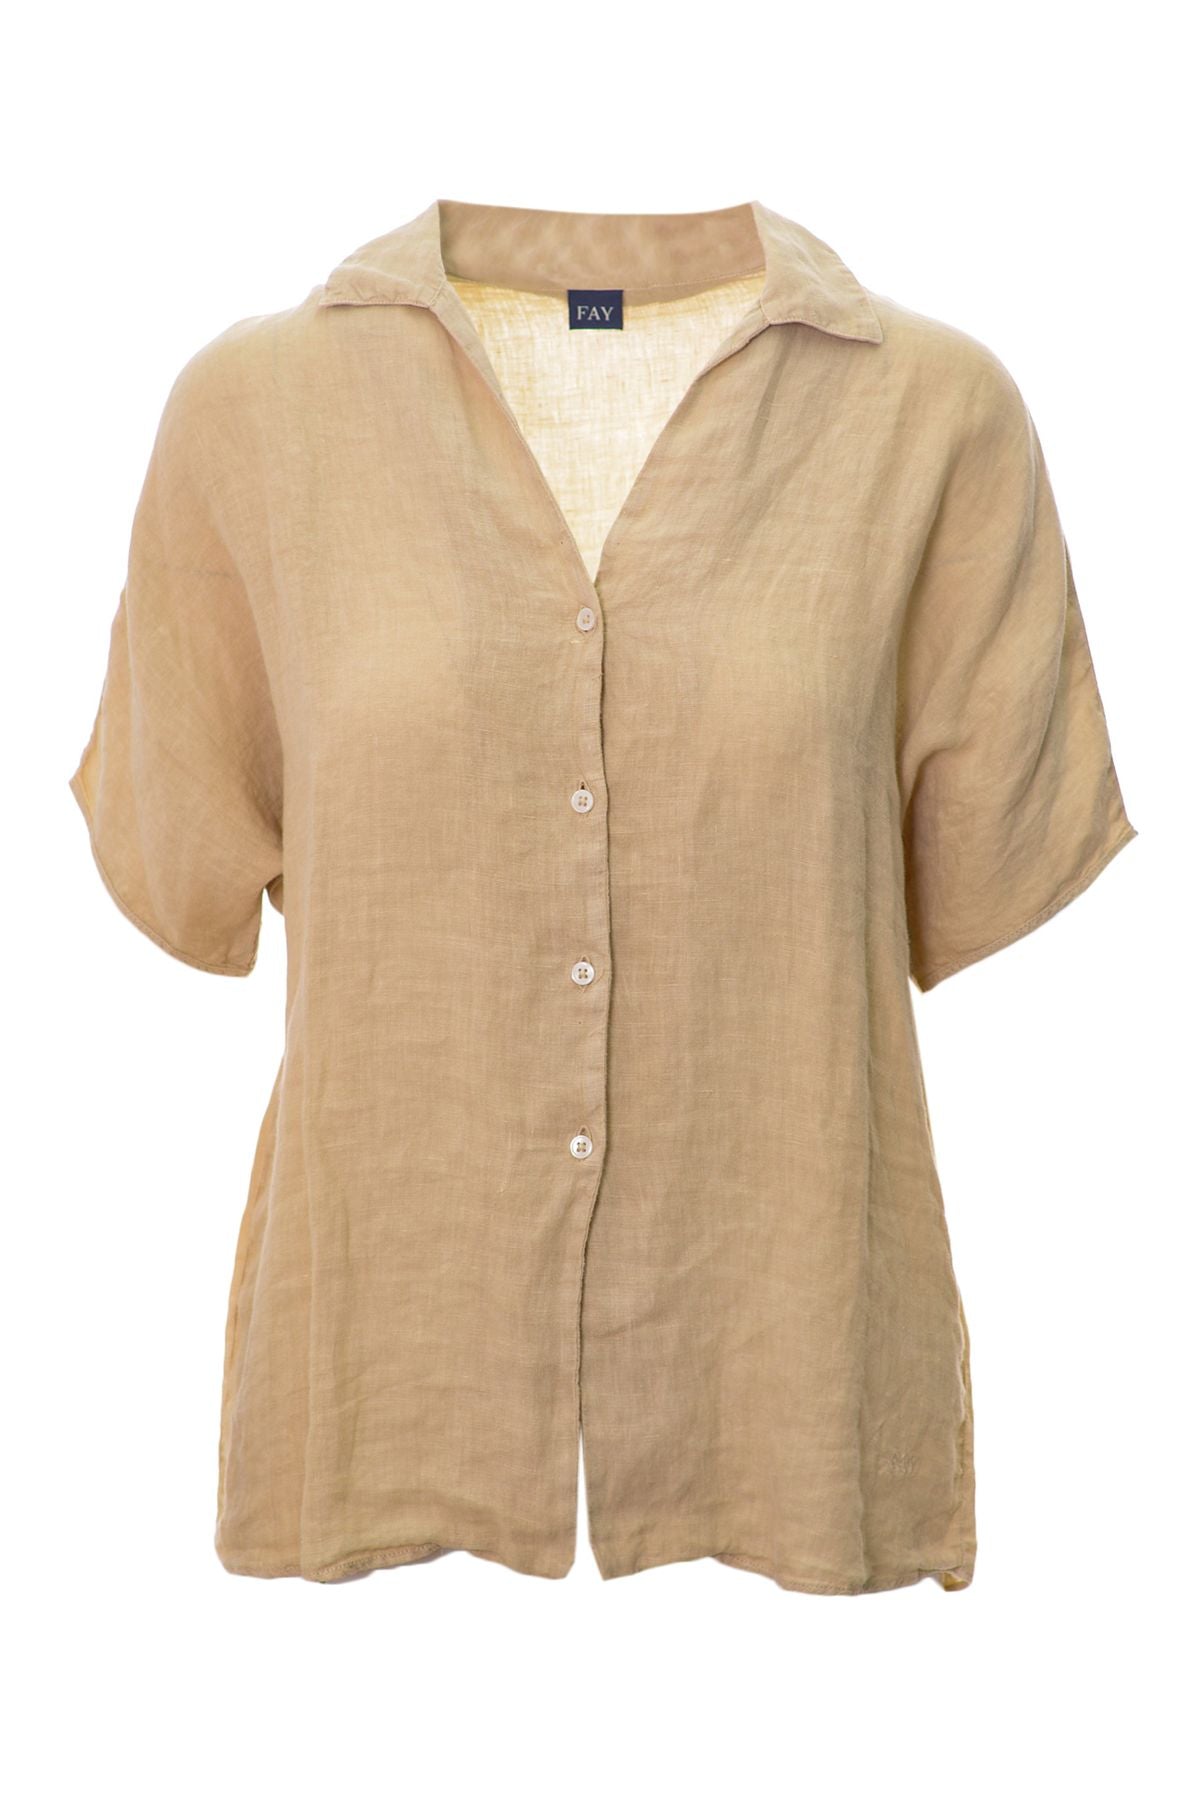 FAY Spring/Summer Linen Shirts